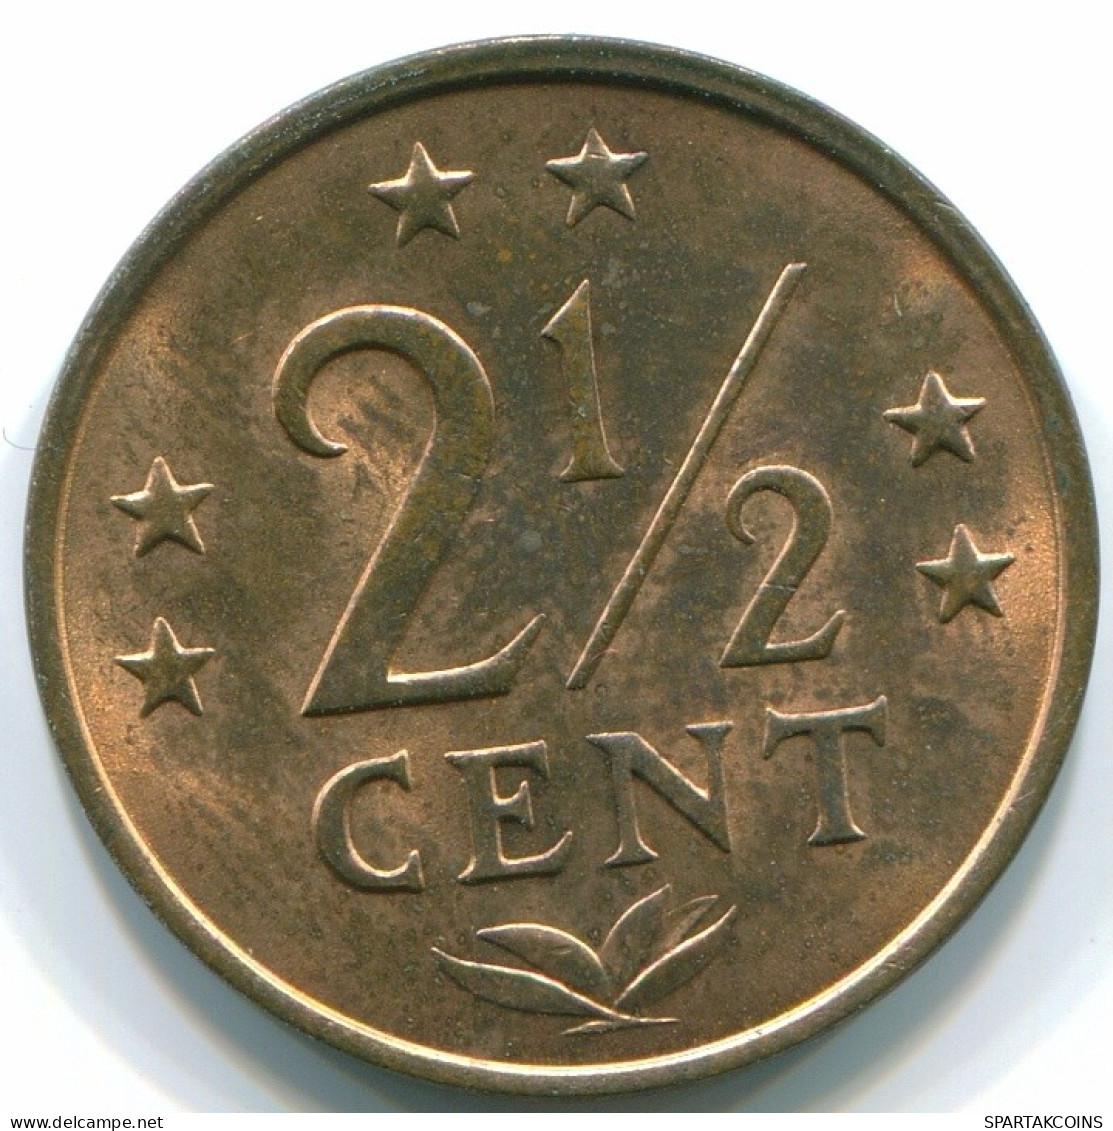 2 1/2 CENT 1976 NETHERLANDS ANTILLES Bronze Colonial Coin #S10532.U.A - Netherlands Antilles